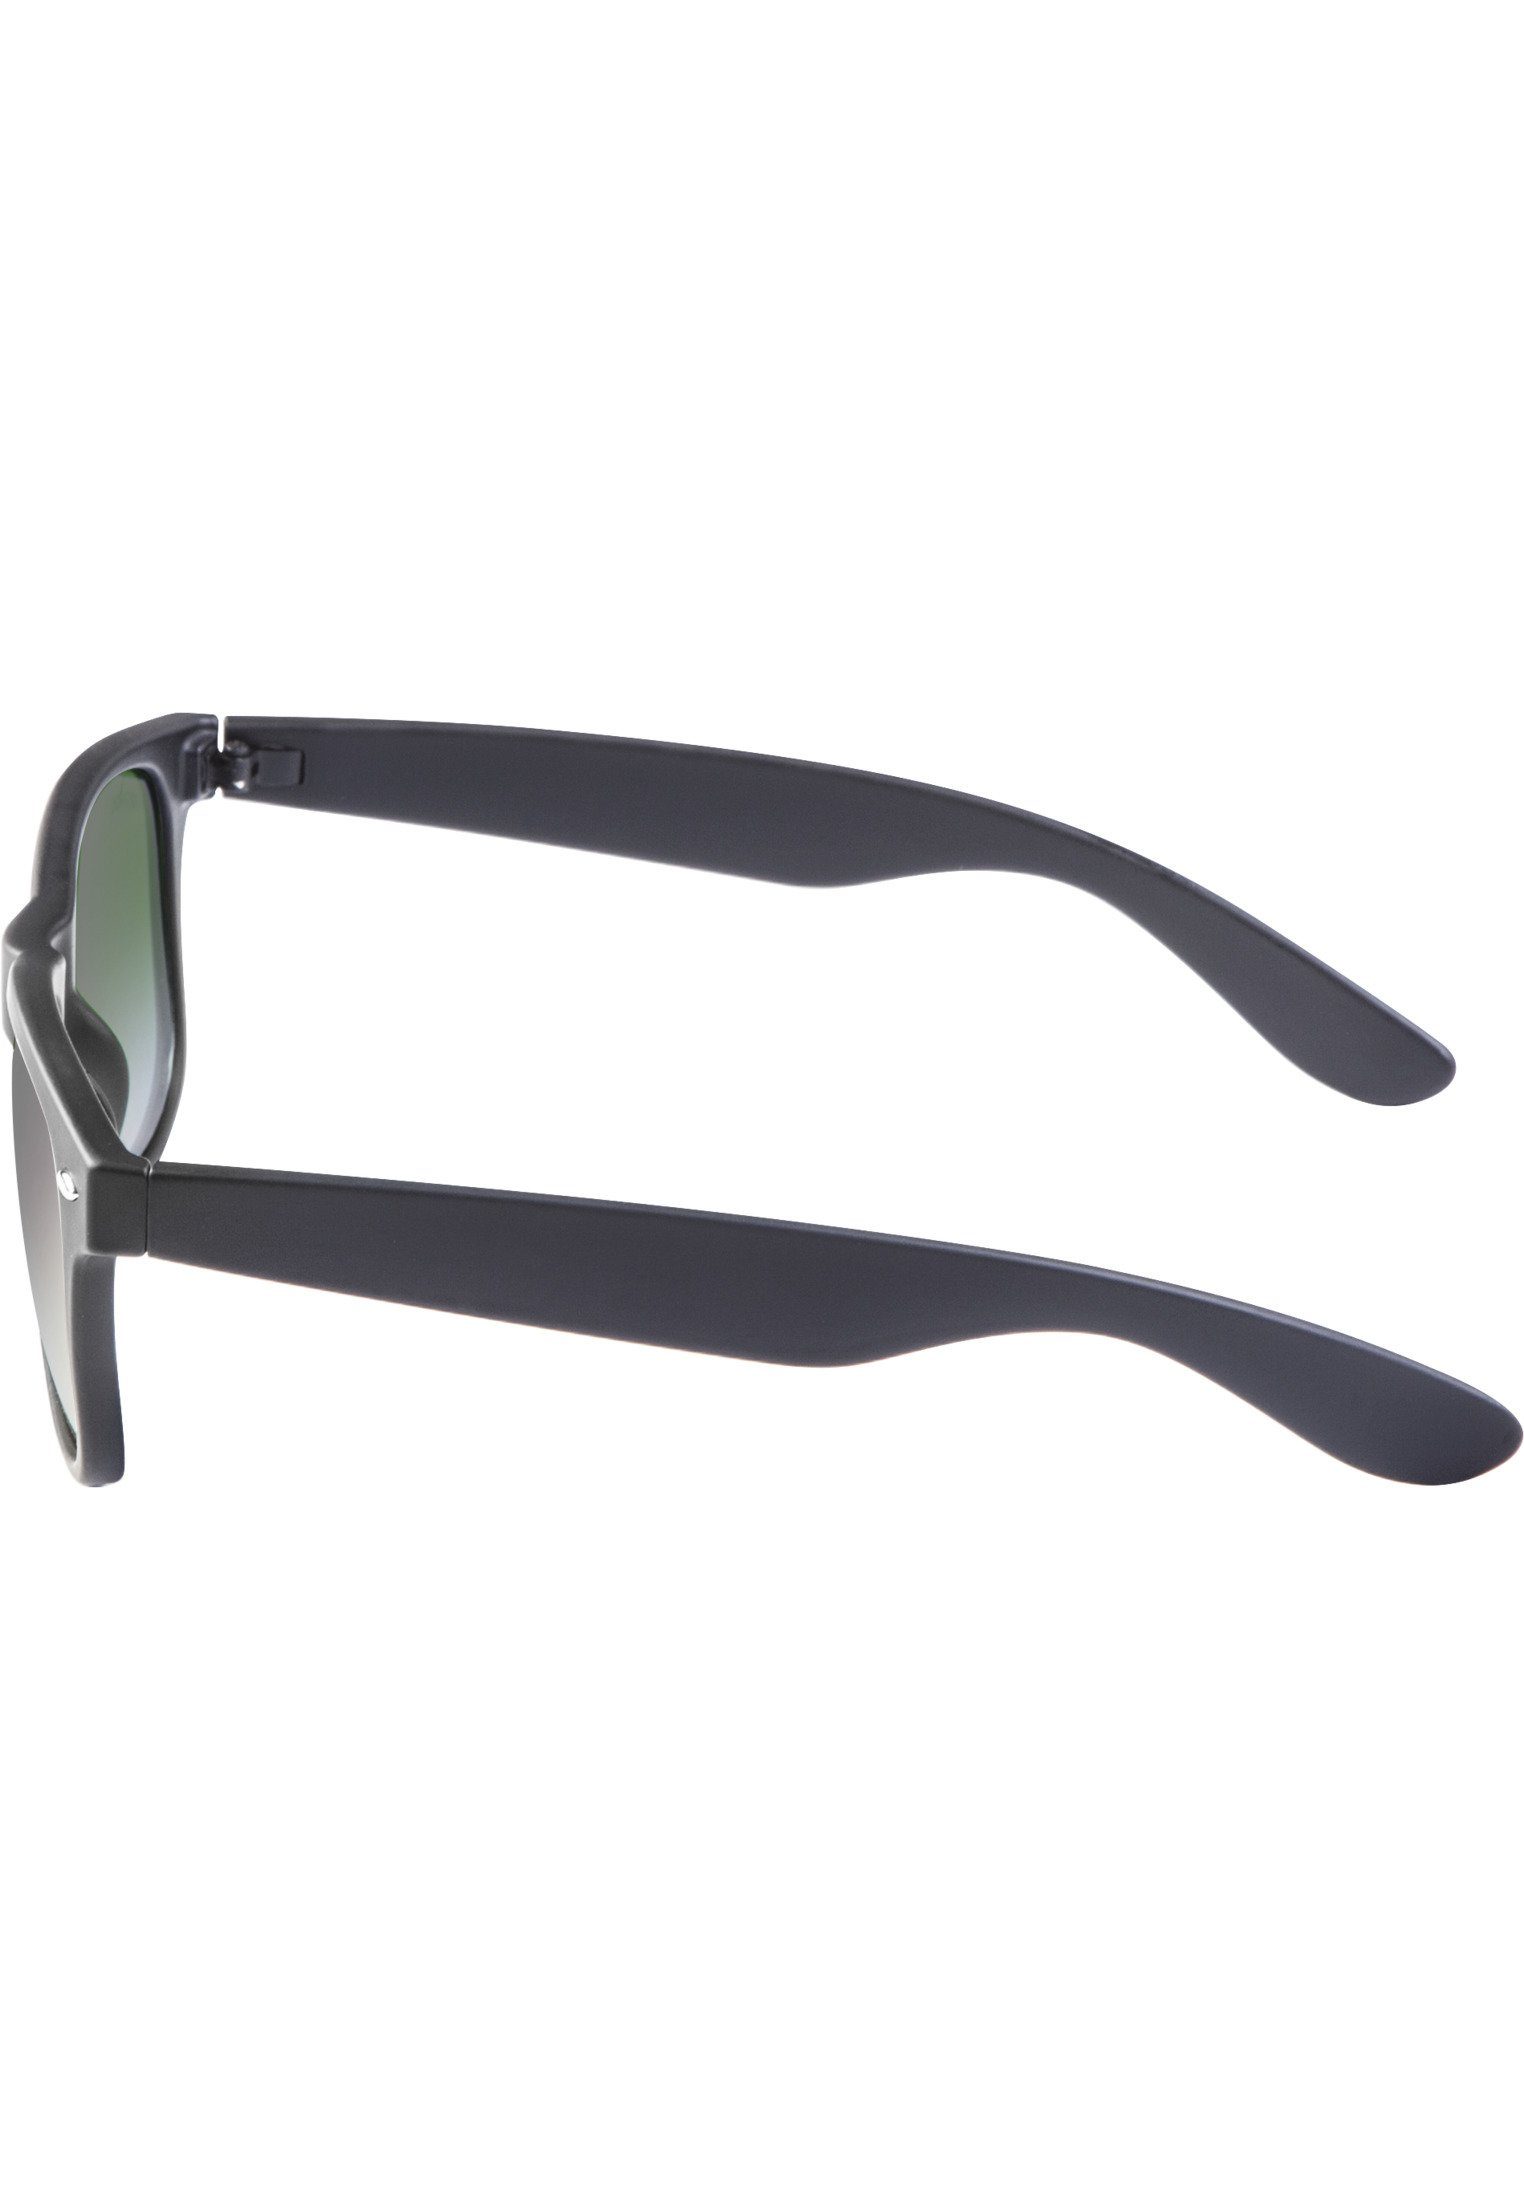 MSTRDS Sonnenbrille Accessoires blk/grn Likoma Sunglasses Youth